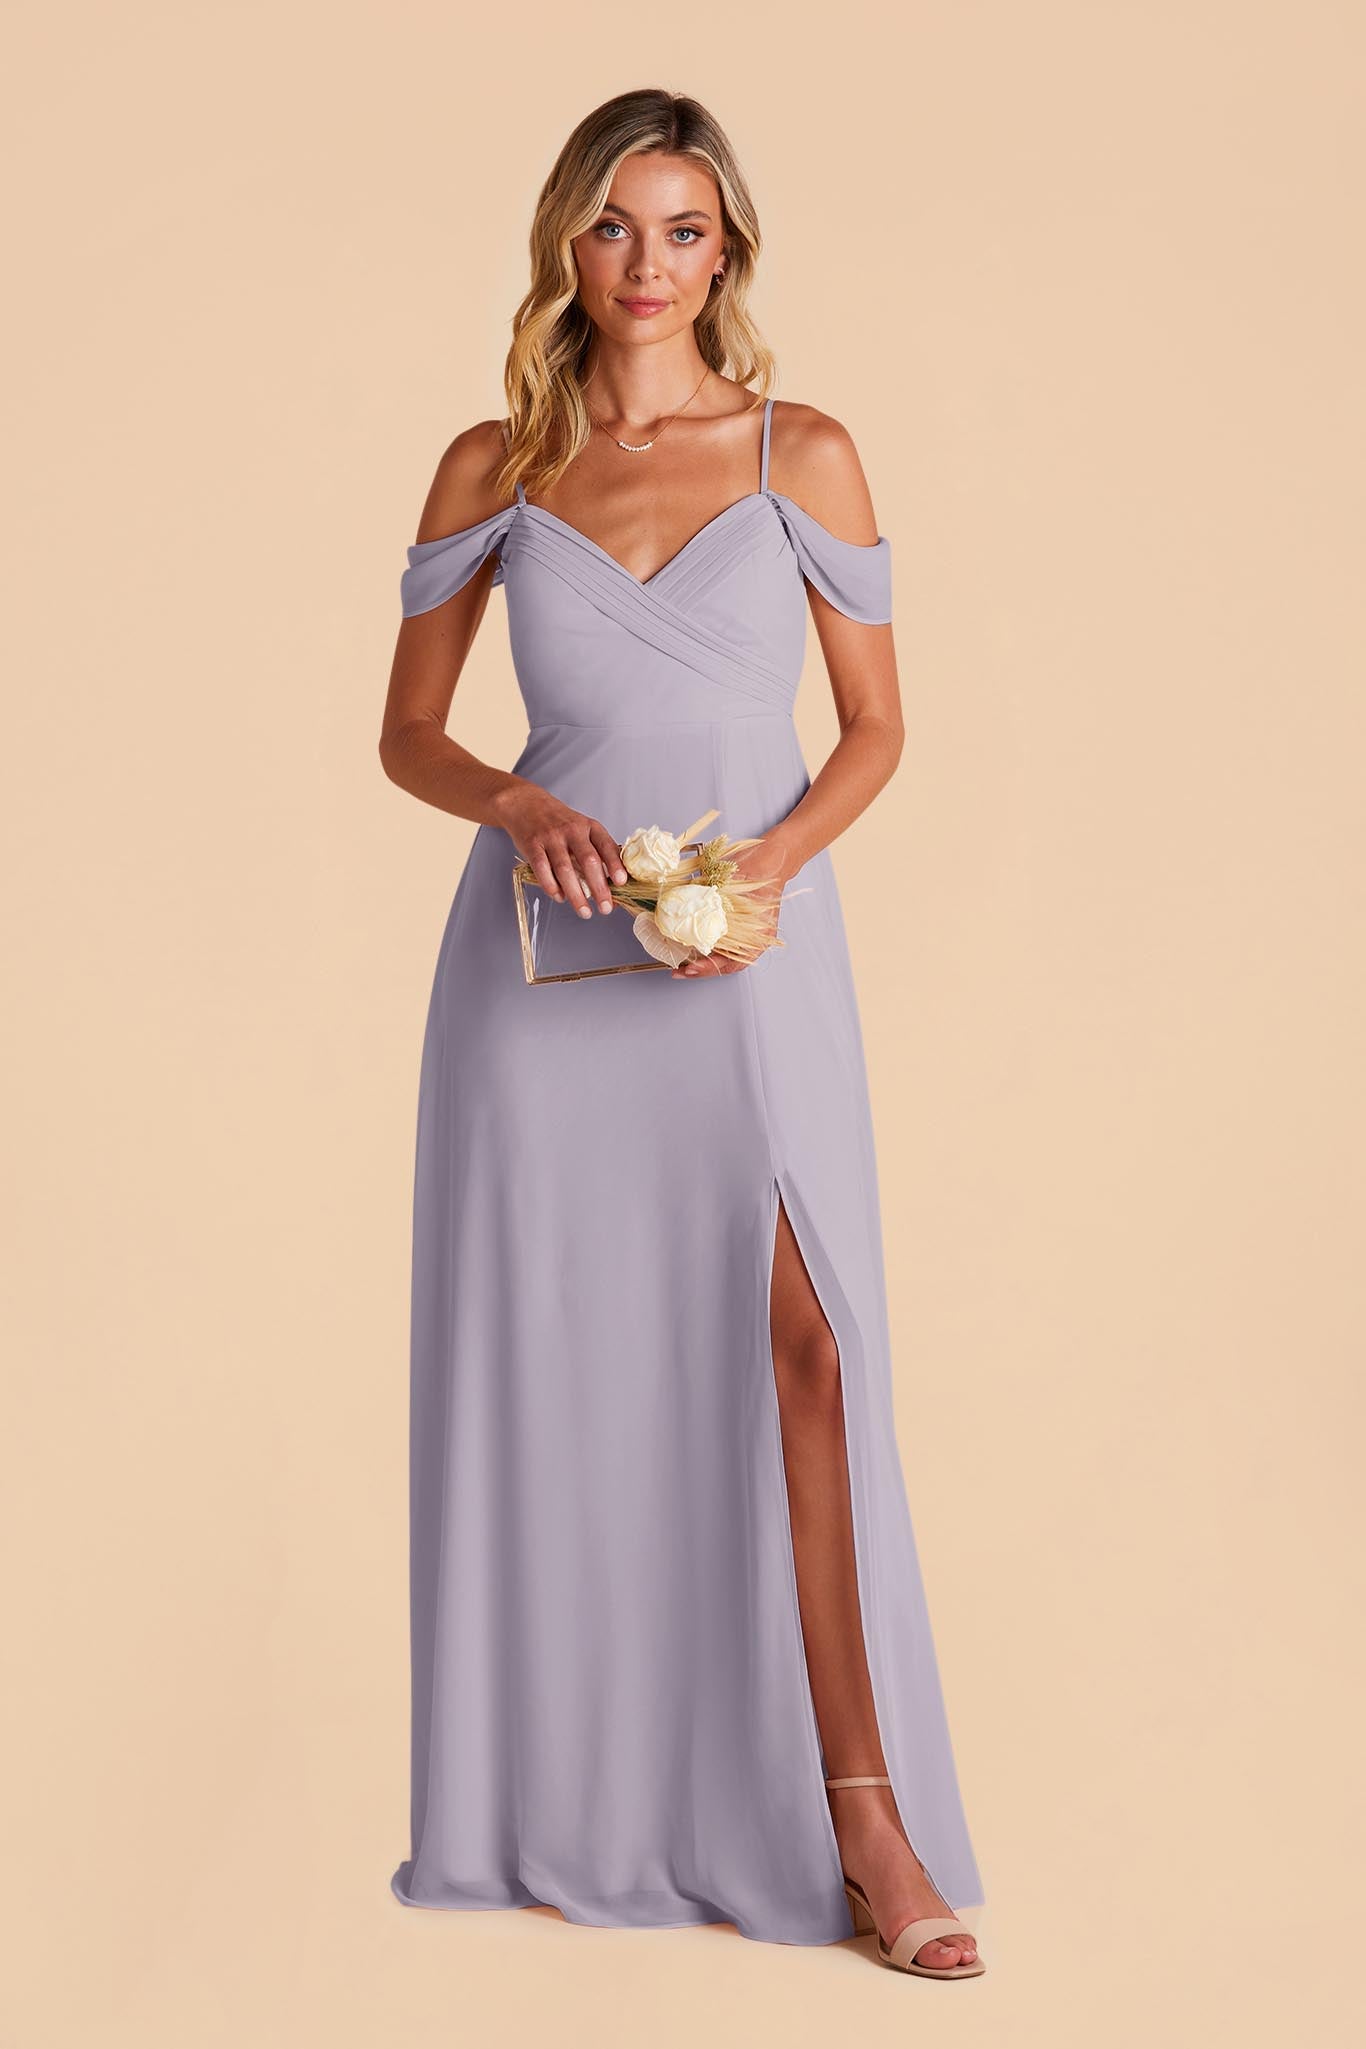 Wear Grey Like a Princess–Kate Middleton and Her Amanda Wakeley Dress –  Helen's Life & Style